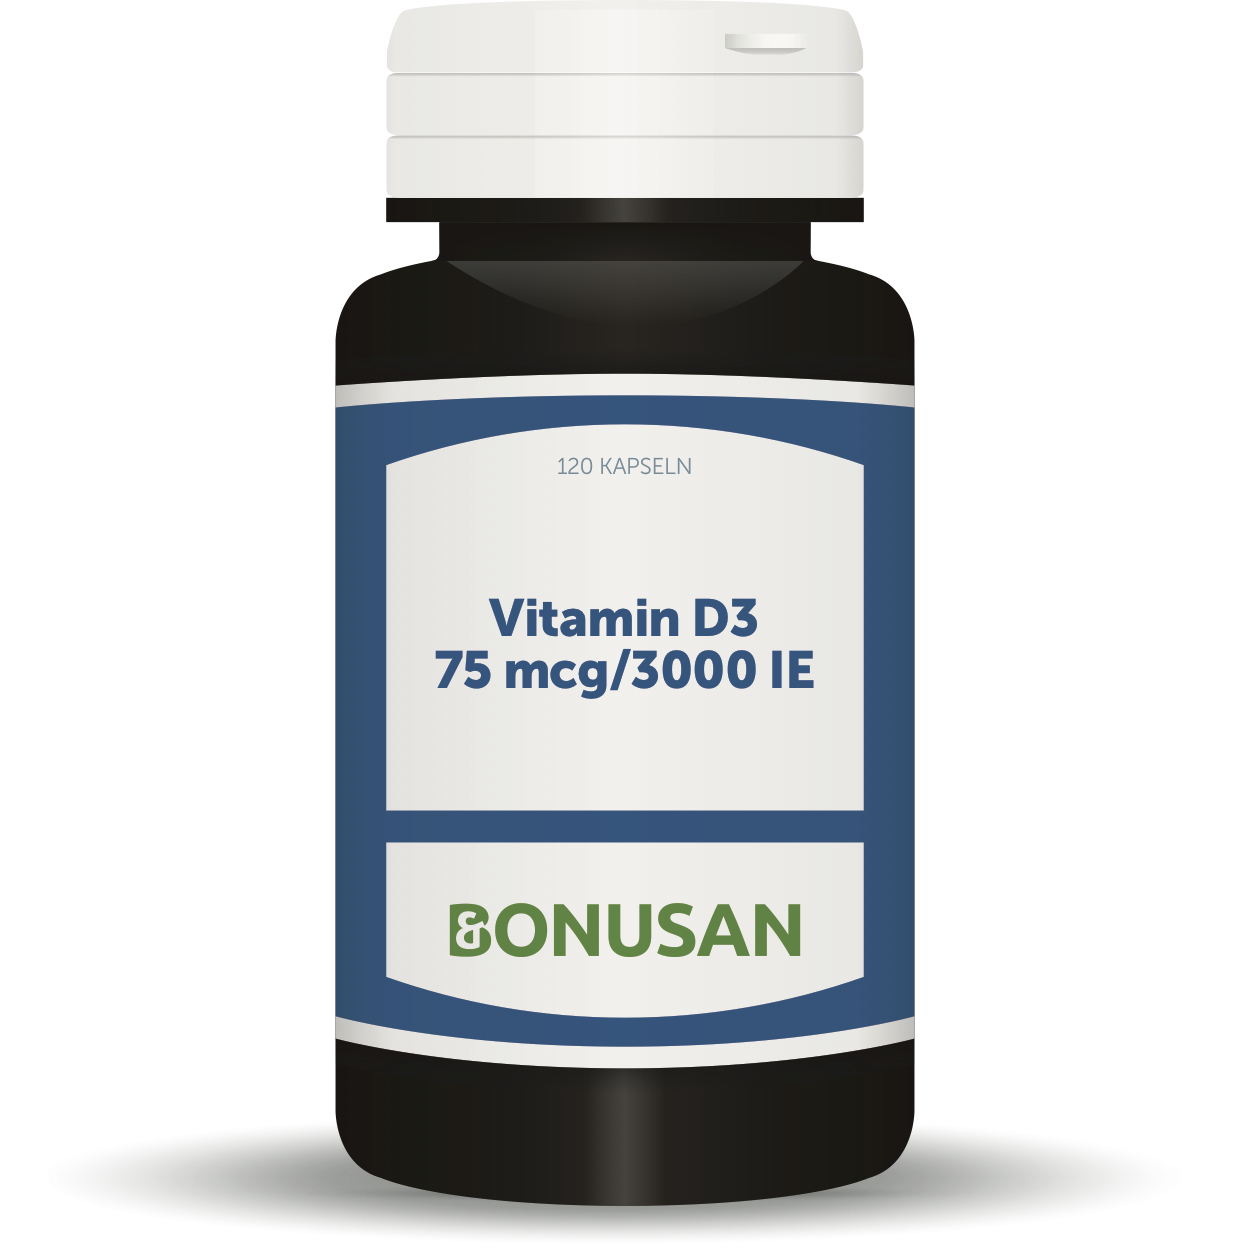 Bonusan „ Vitamin D3 75mcg/3000 IE“ - 120 Kapseln